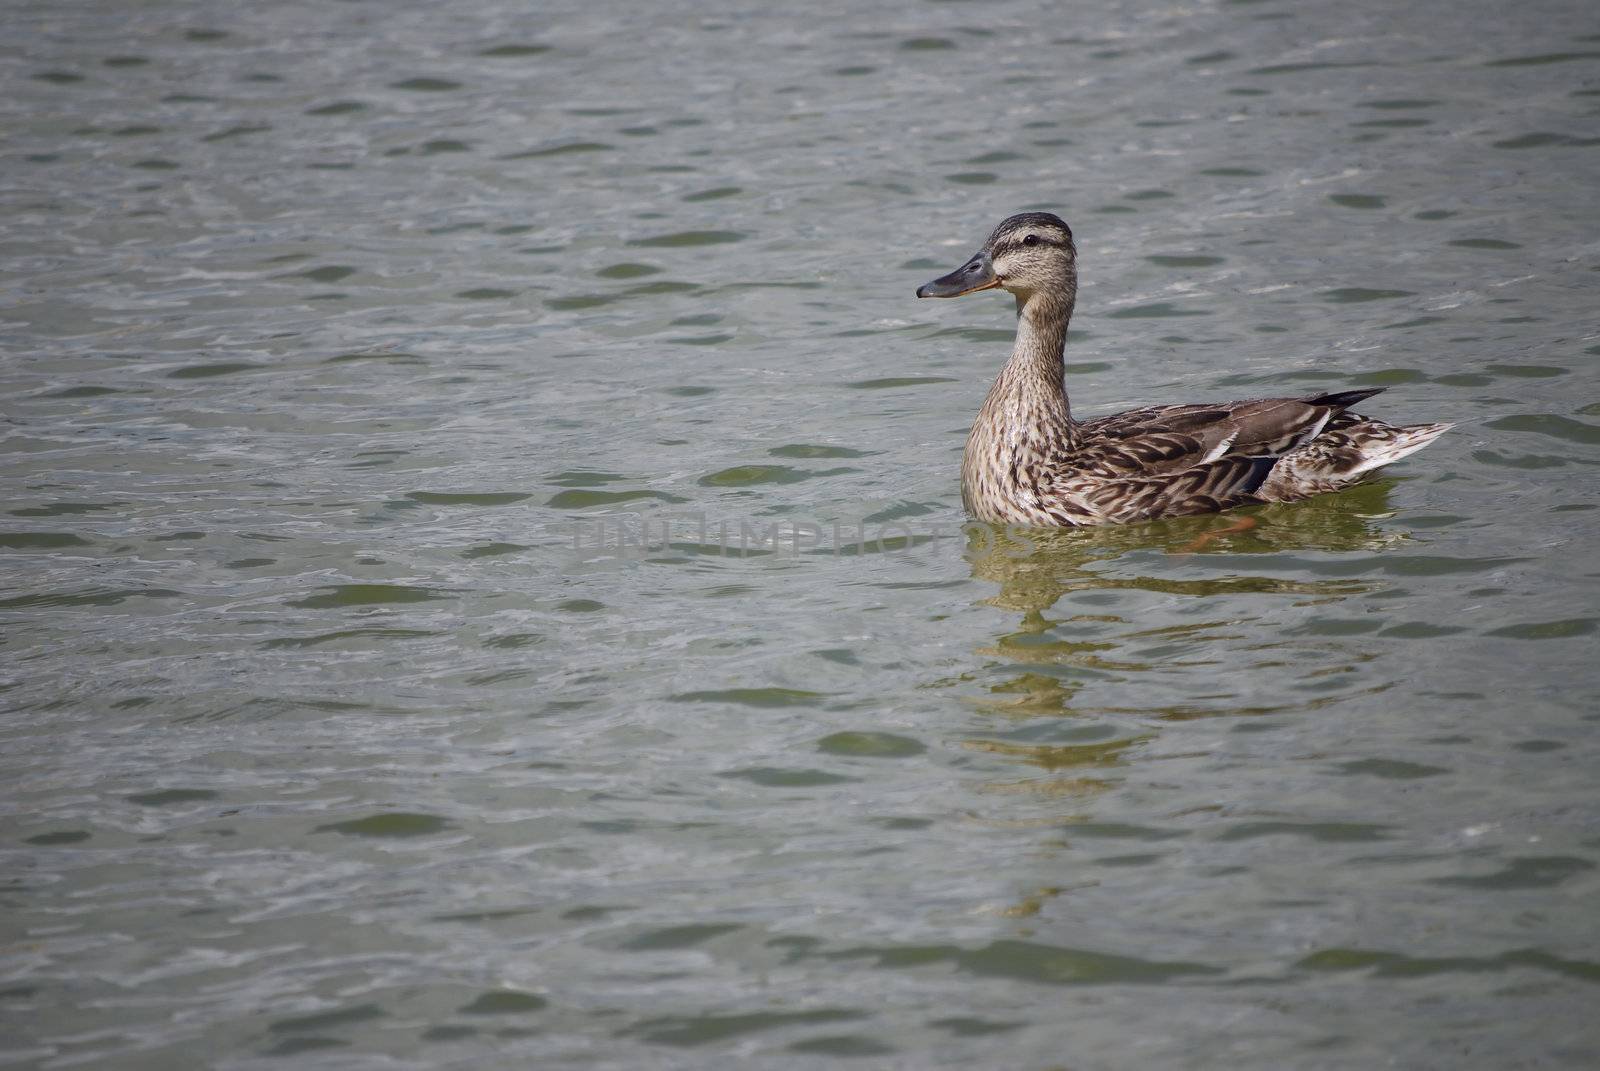 wild duck on a pond, in paris france